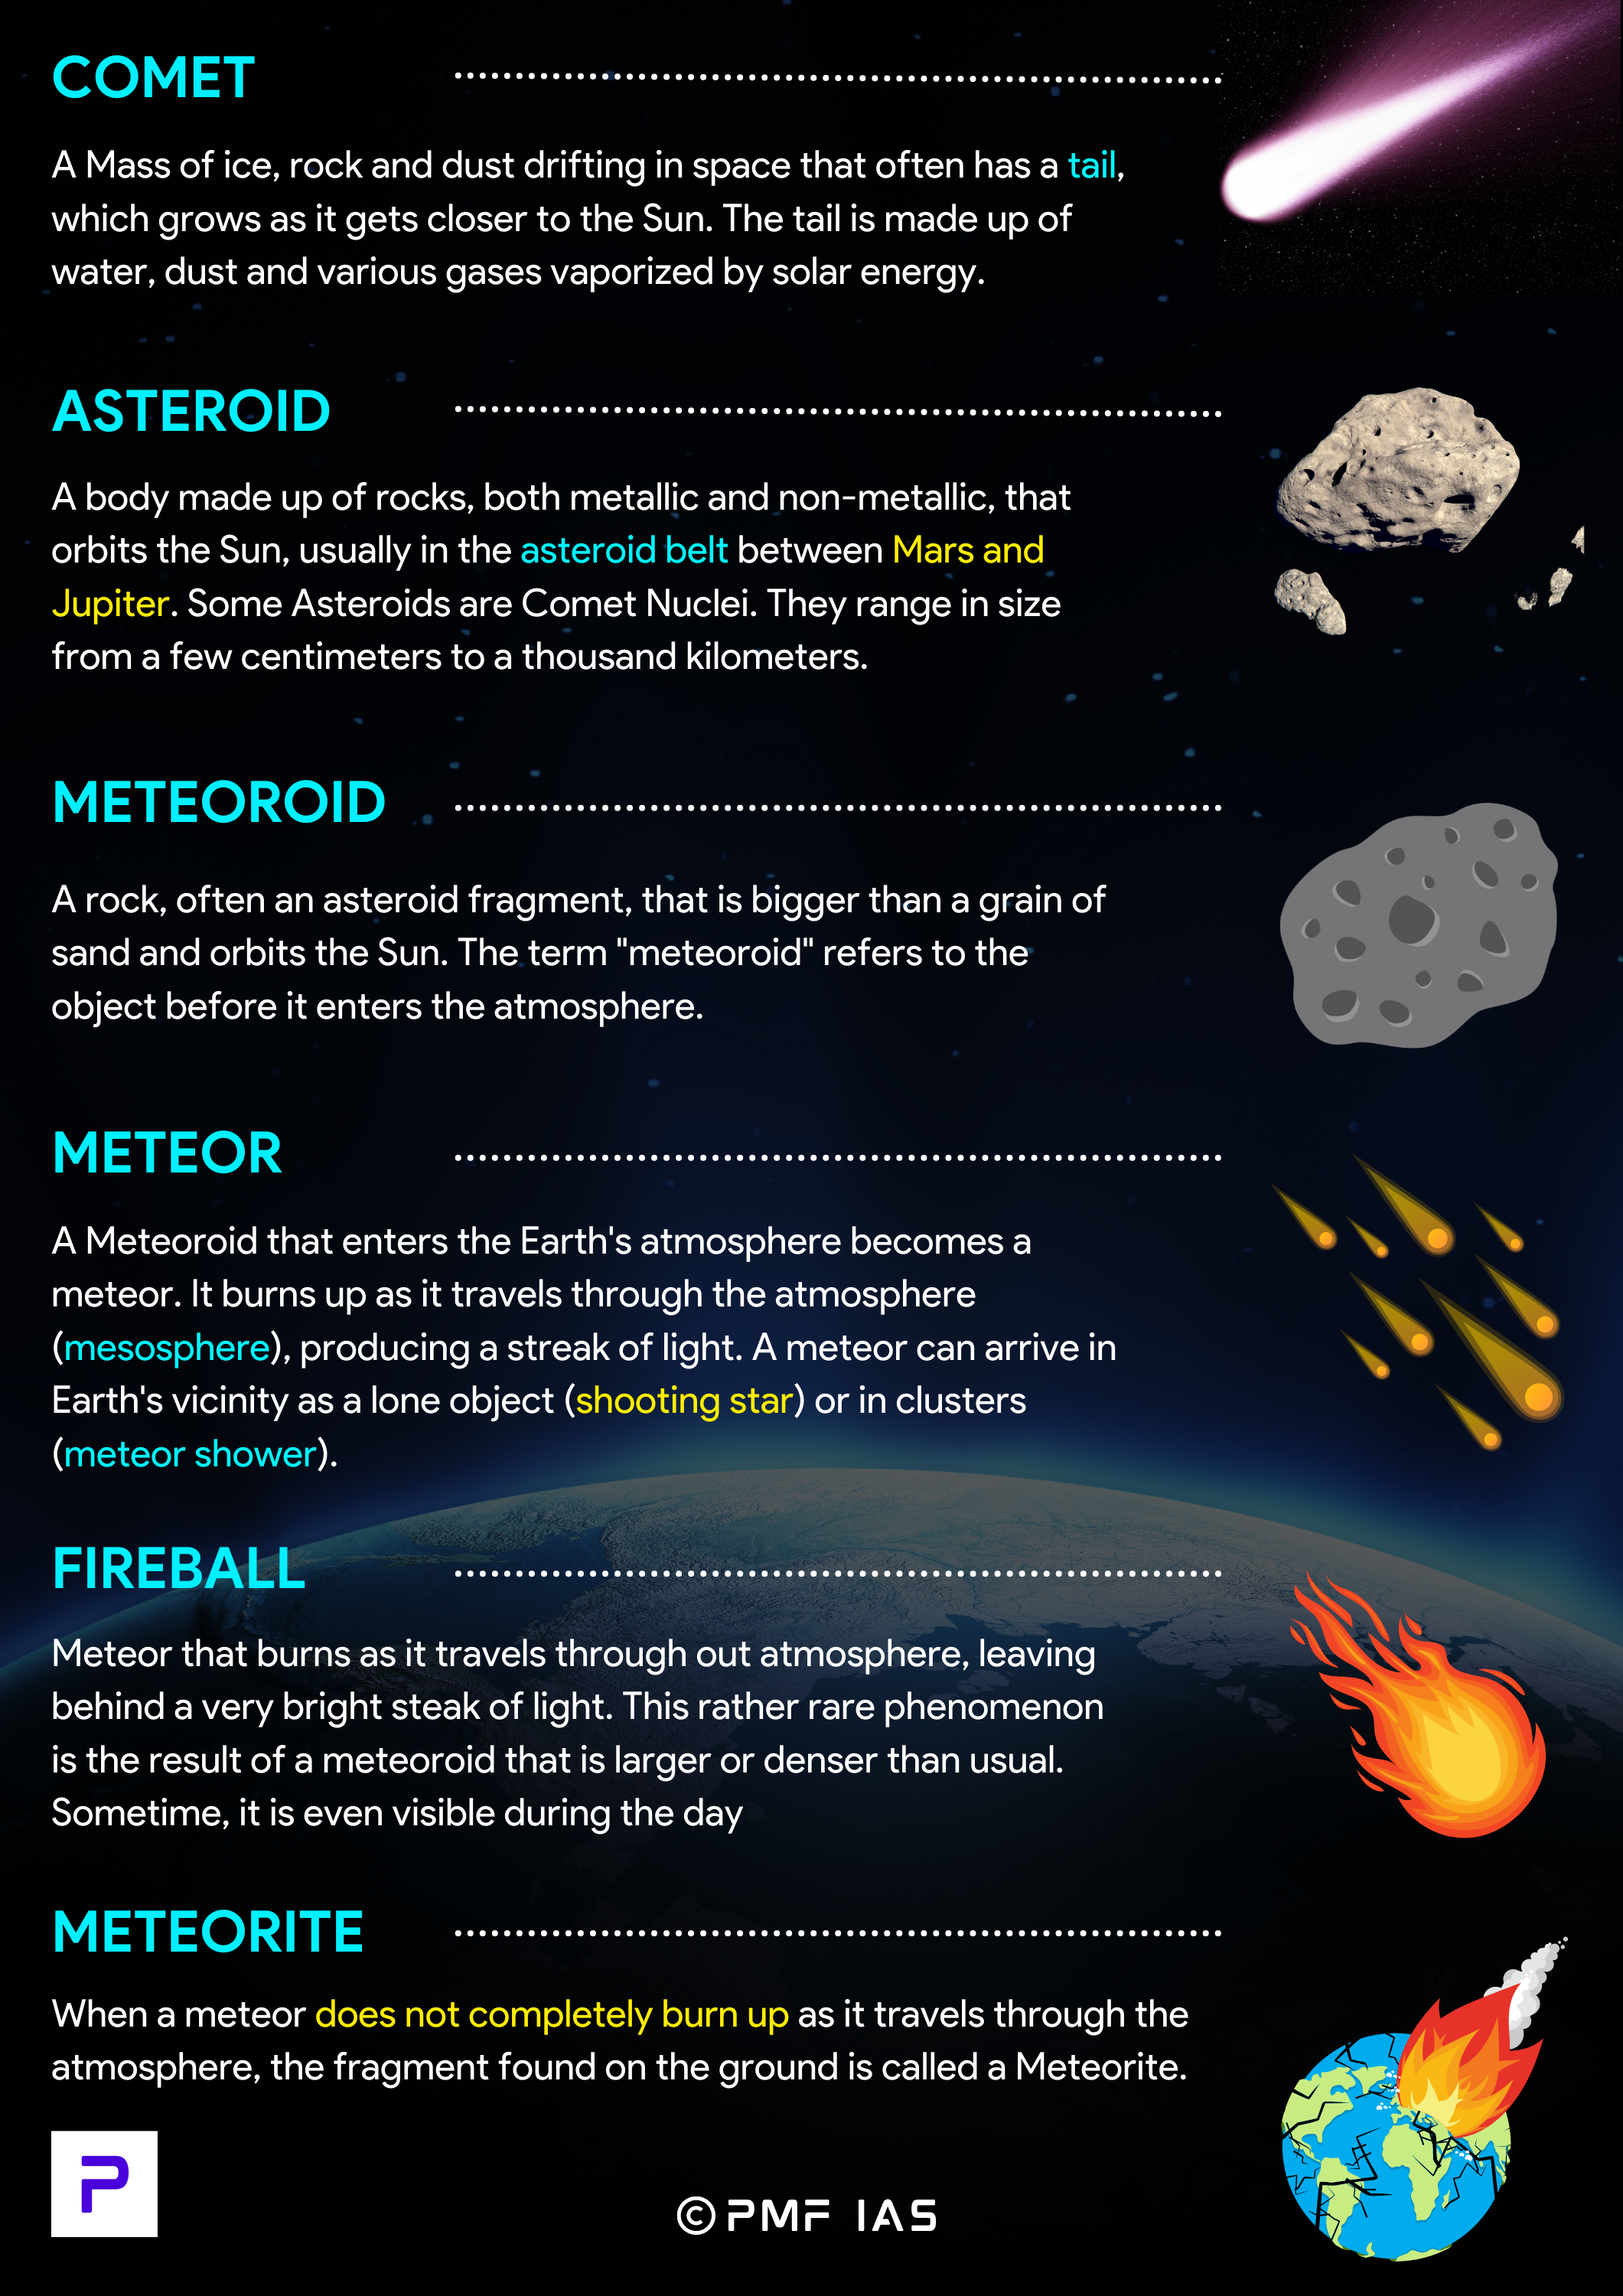 Comet Asteroid Meteoroid Meteor Meteorite Fireball